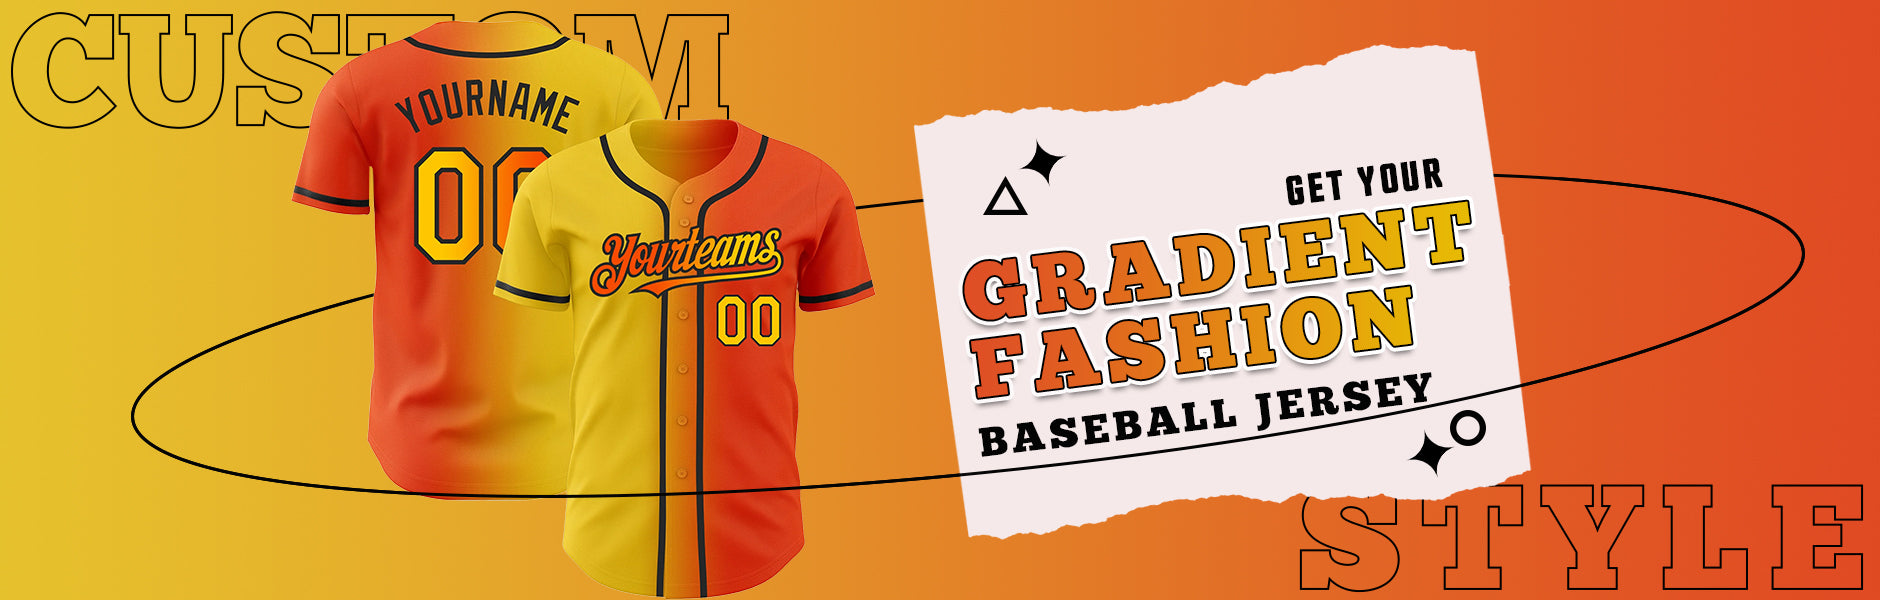 custom Gradient Fashion Baseball jersey